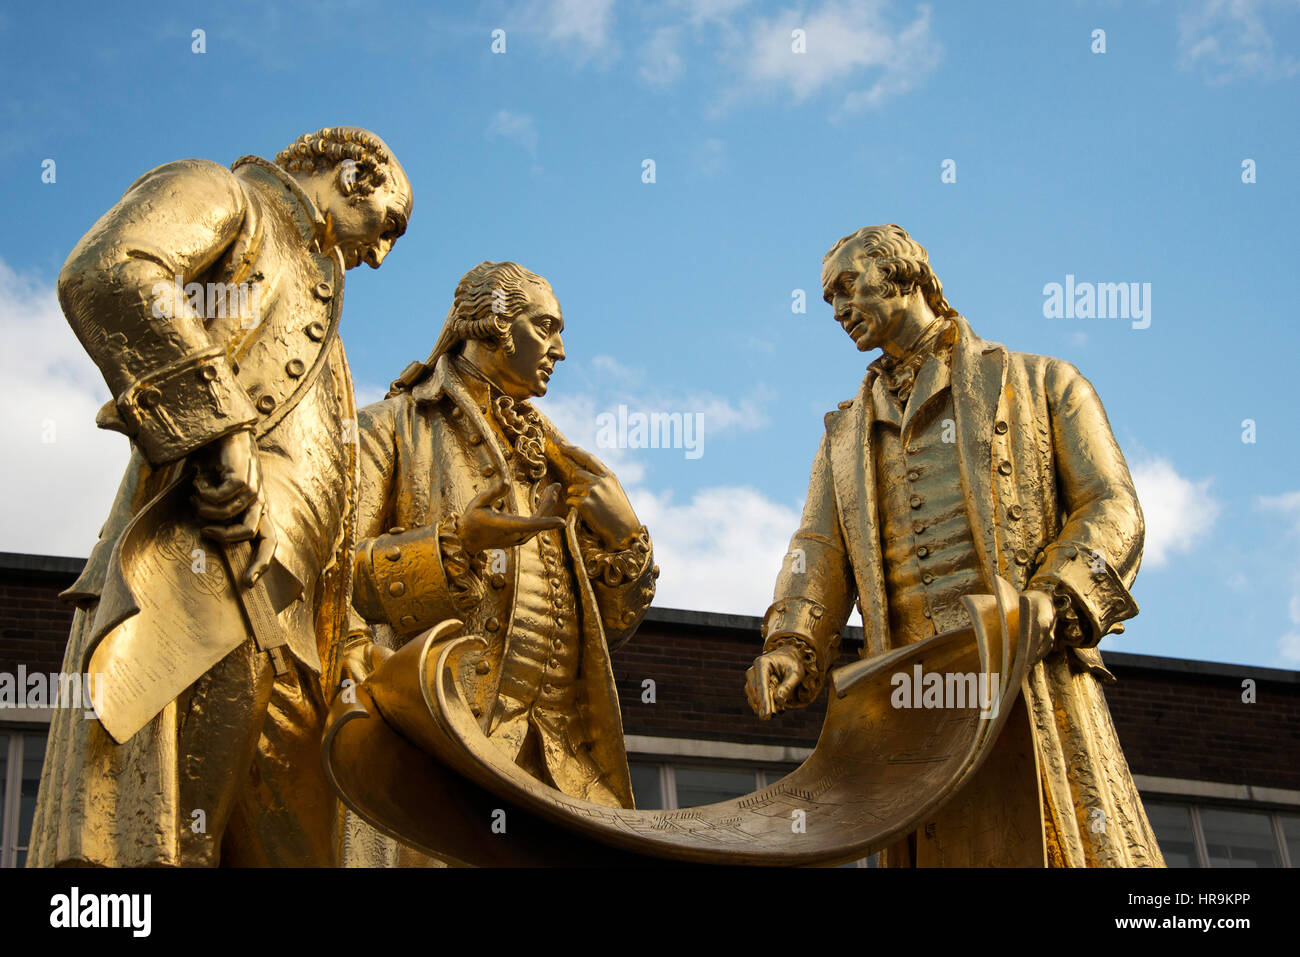 Statue of Matthew Boulton, James Watt, and William Murdoch by William Bloye, Birmingham, England Stock Photo